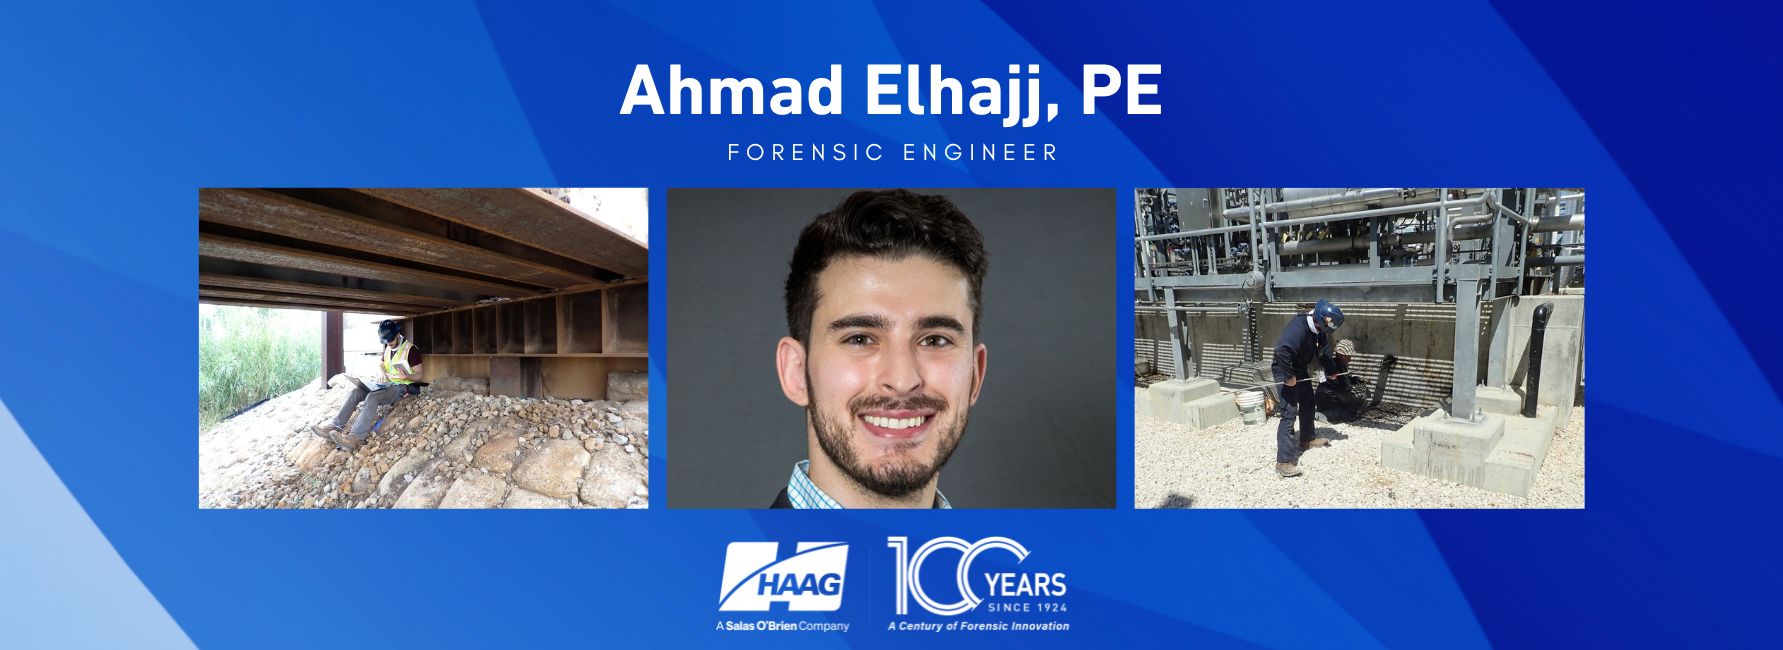 Ahmad Elhajj: Expert Forensic Engineer in Baltimore, MD